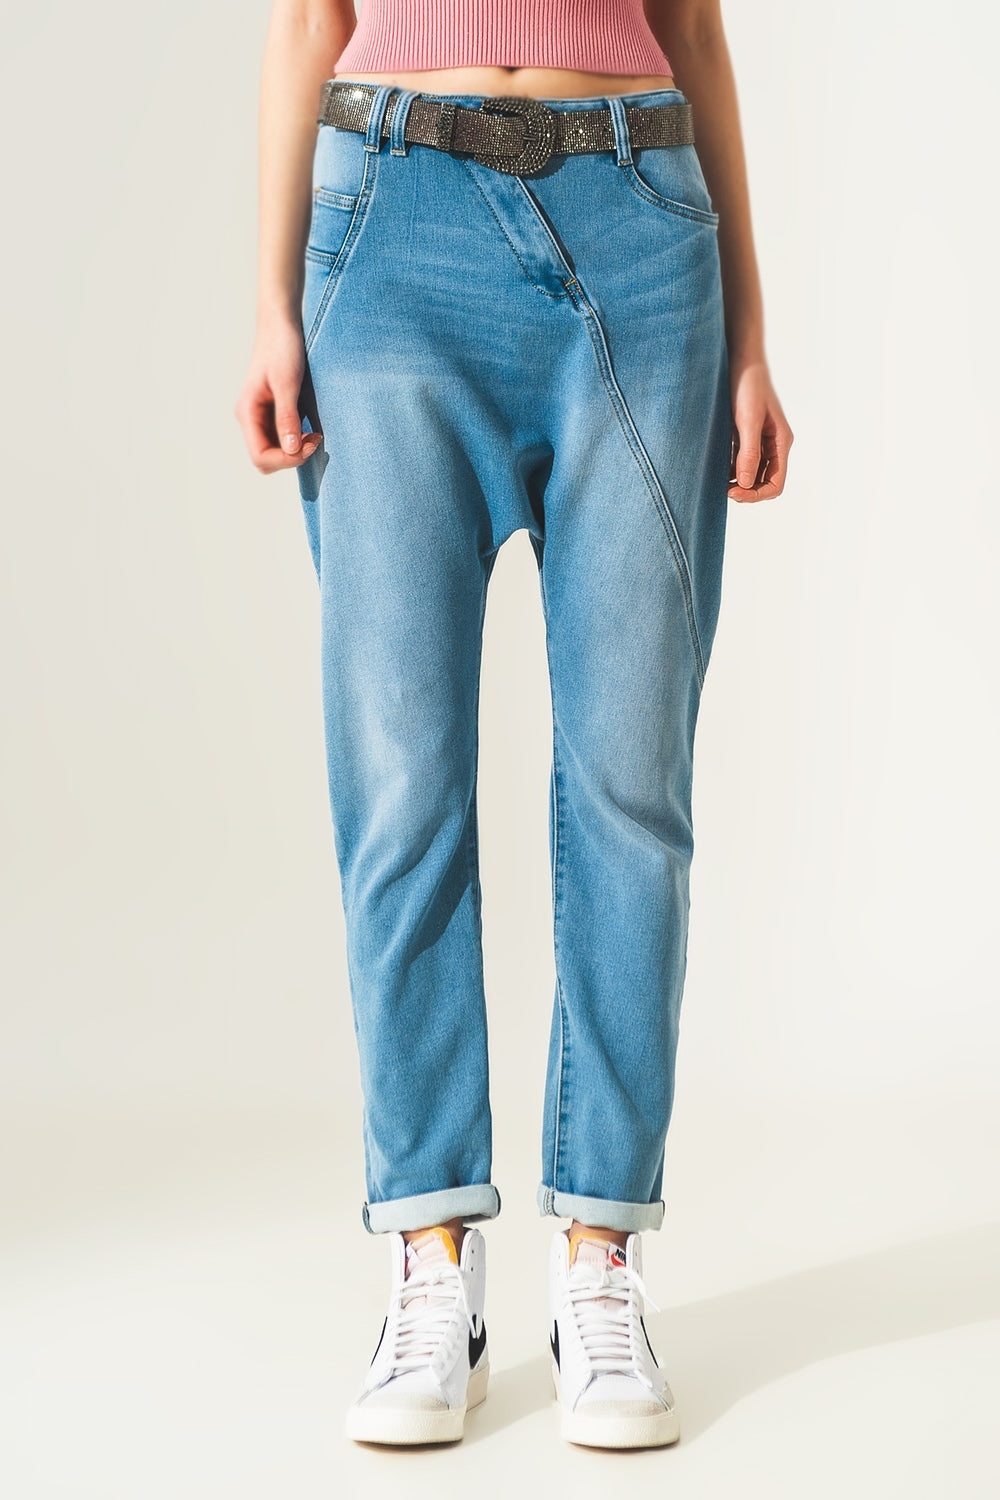 TEEK - Blue Vintage Wash 90s Baggy Jeans JEANS TEEK M Extra Small  